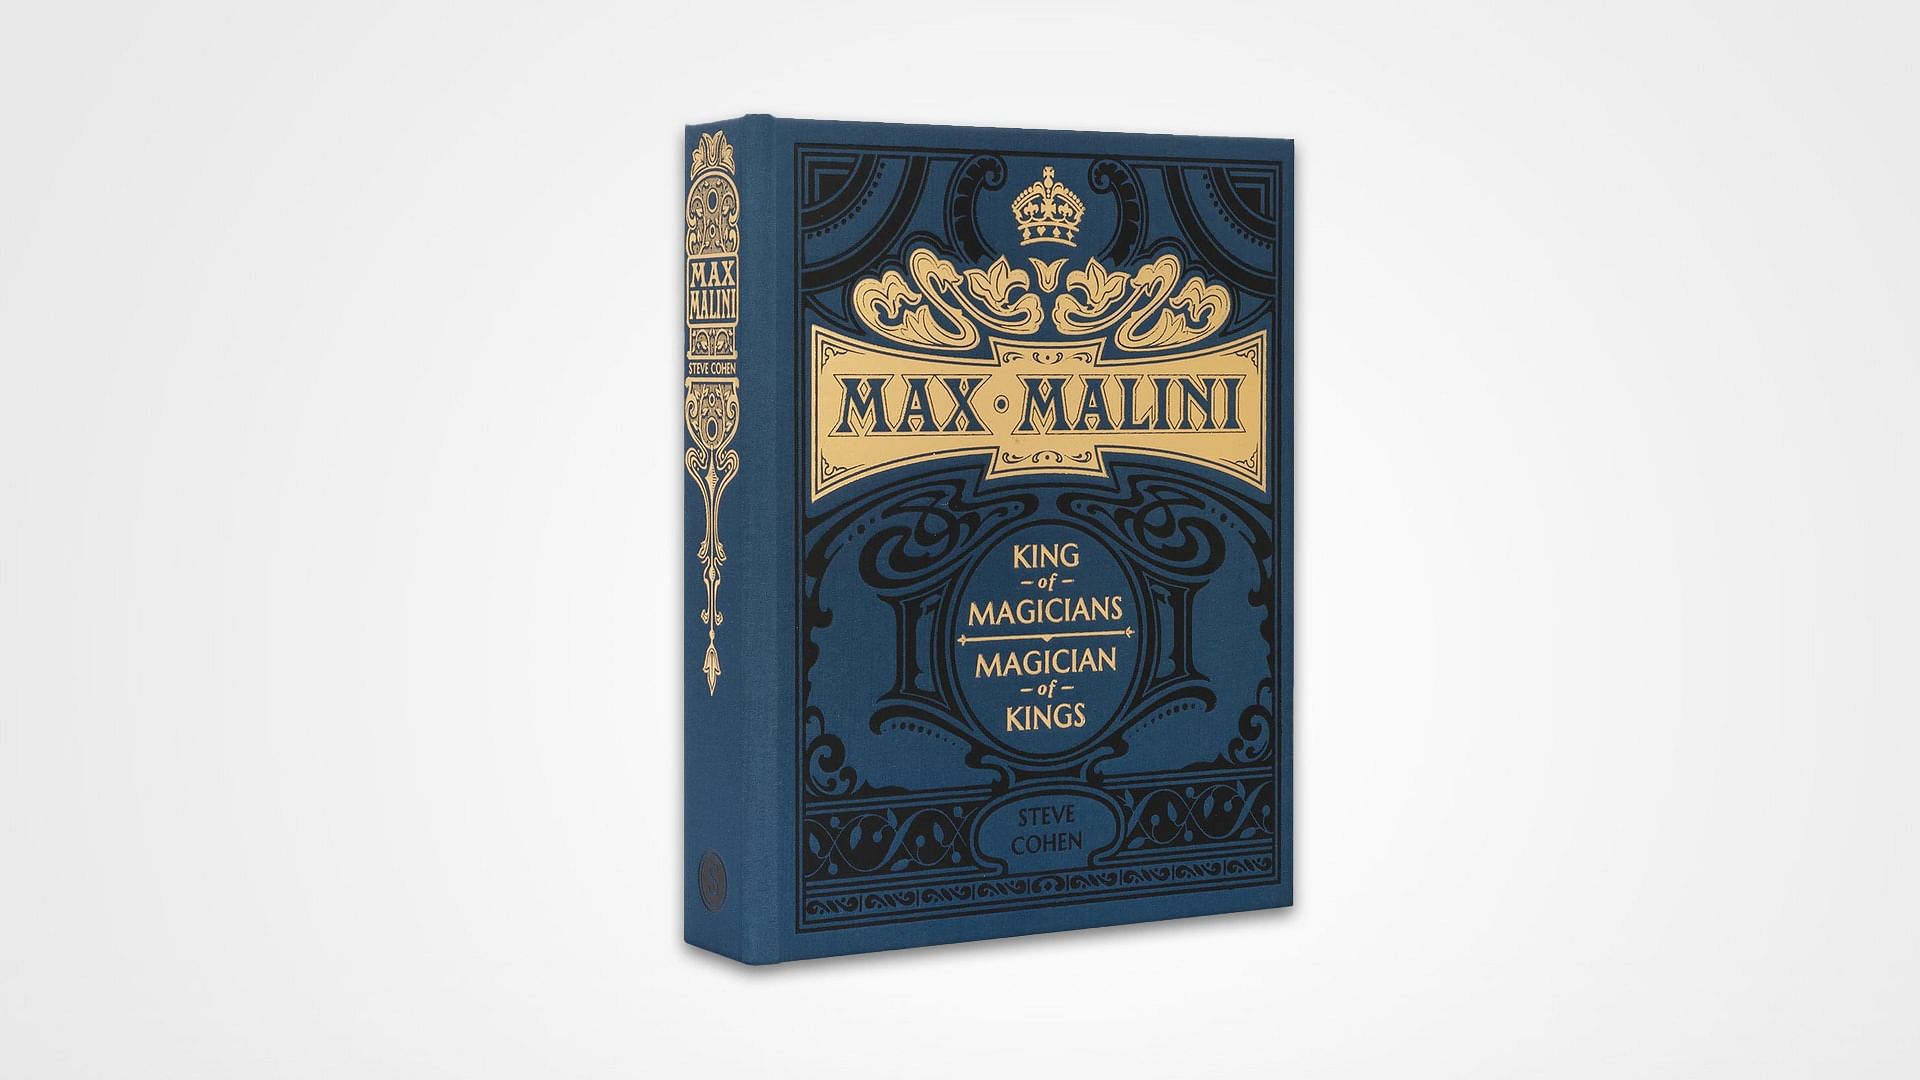 Steve Cohen - Max Malini: King of Magicians, Magician of Kings